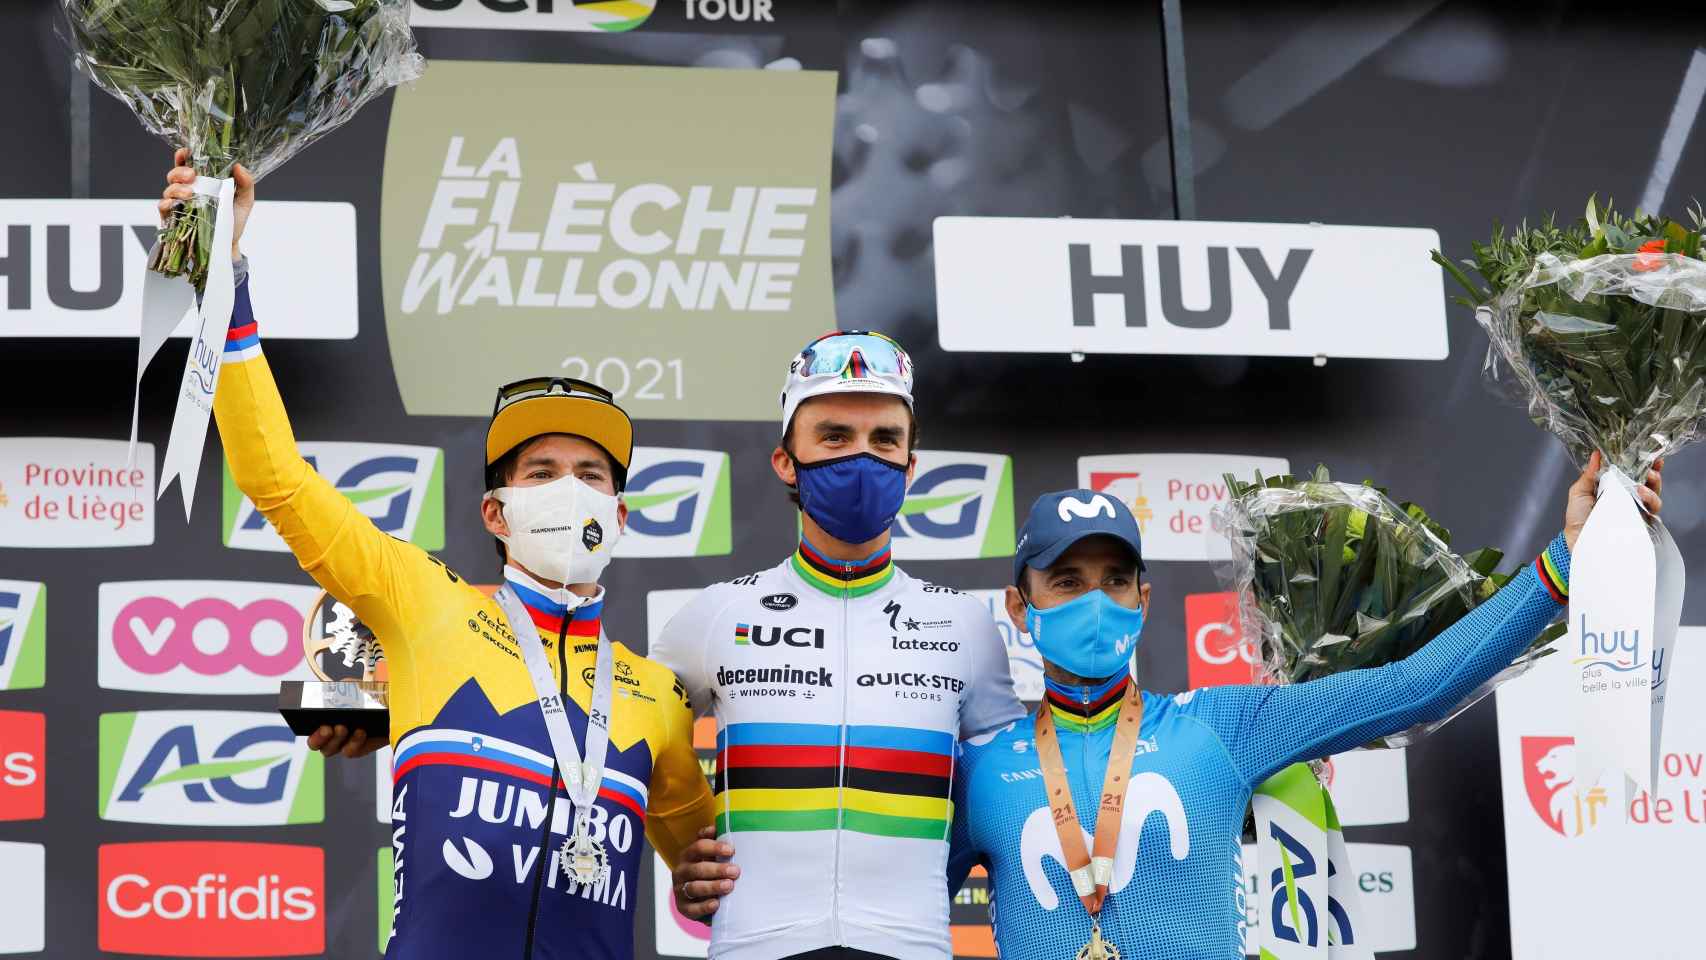 El podio de la Flecha Valona de 2021 con Primoz Roglic, Julian Alaphilippe y Alejandro Valverde